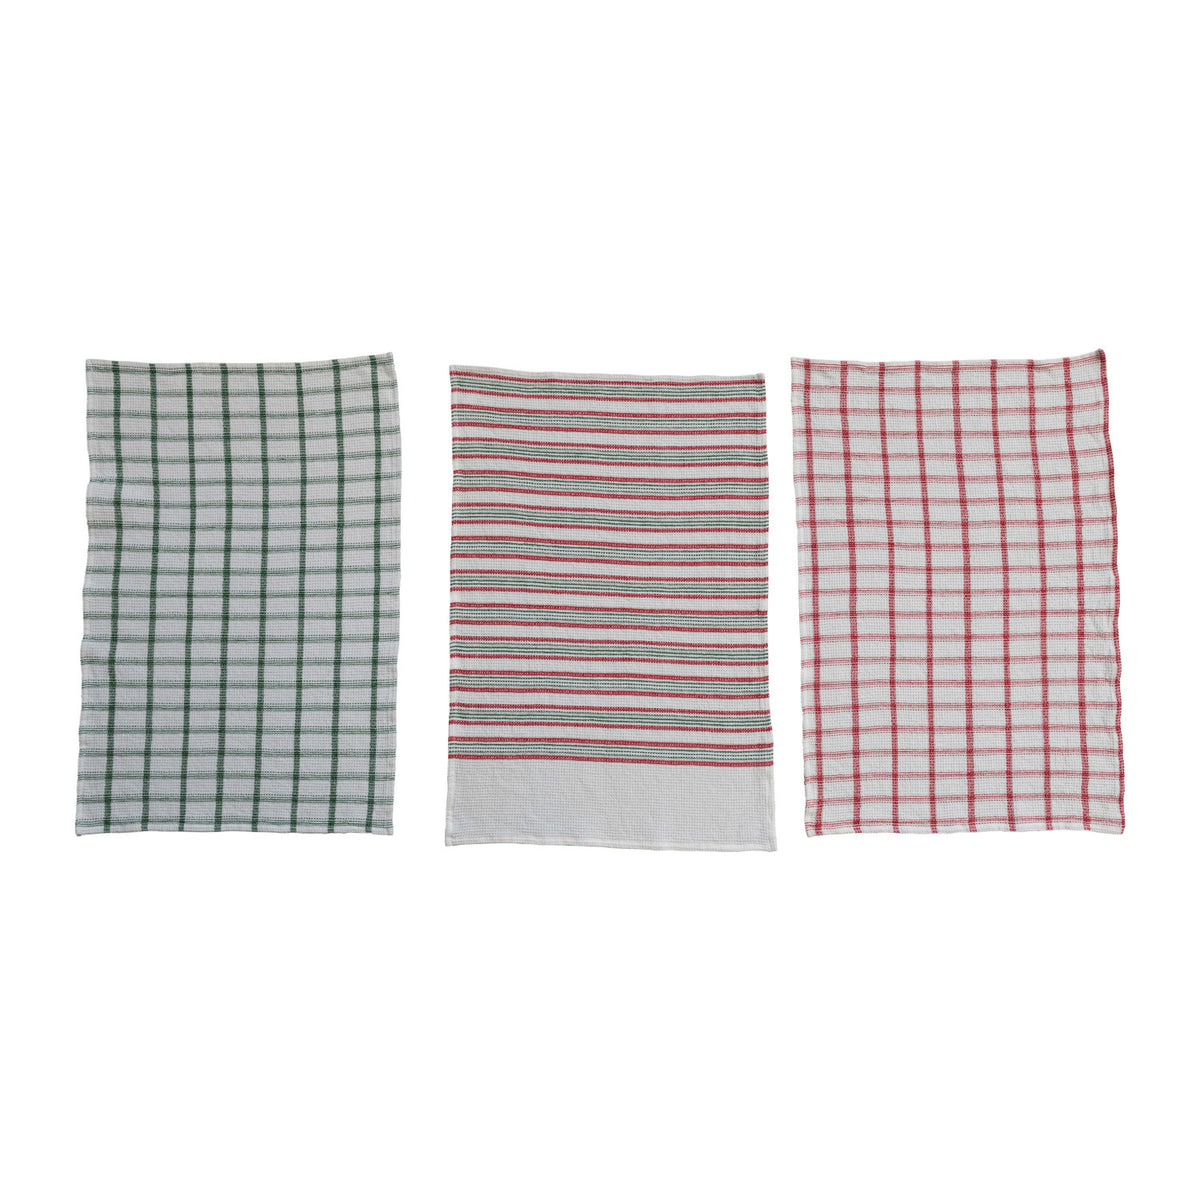 28"L x 18"W Cotton Waffle Weave Tea Towel w/ Stripes/Grid Pattern